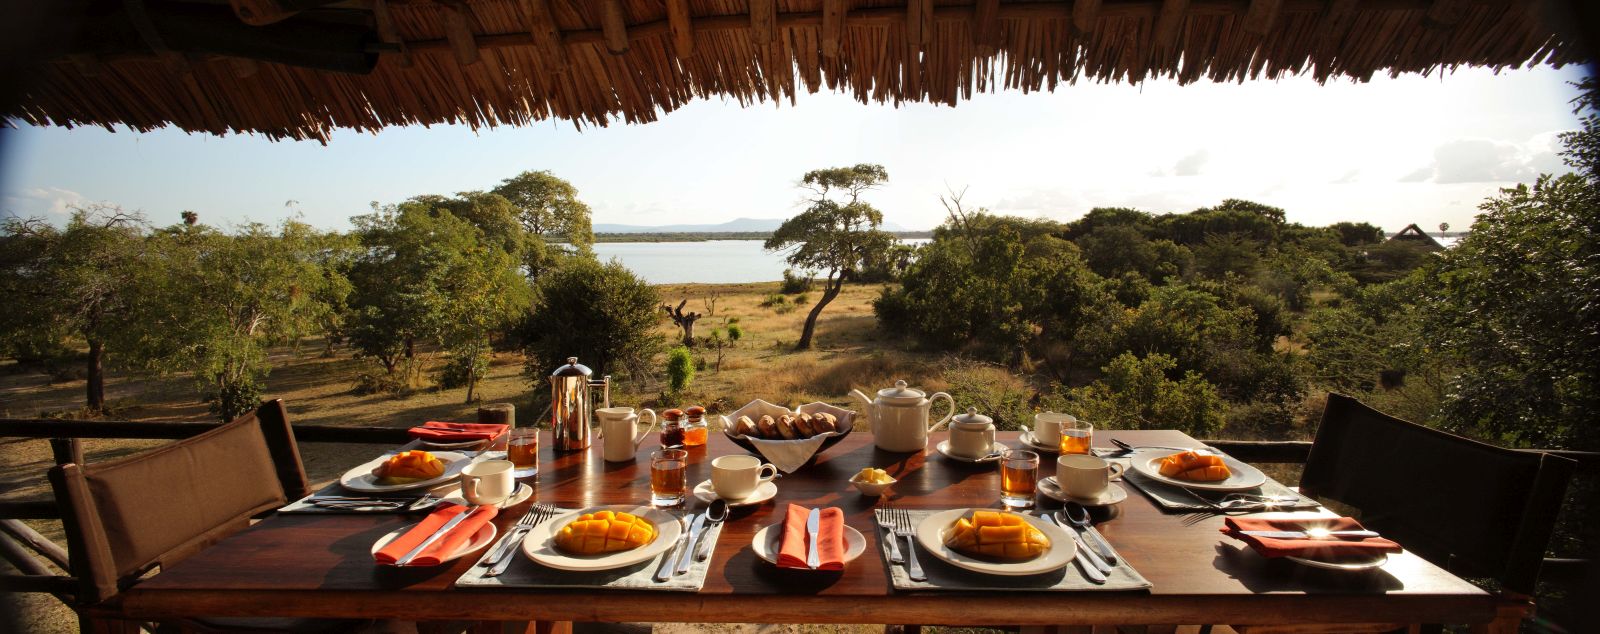 Breakfast with a view at Siwandu in Tanzania 